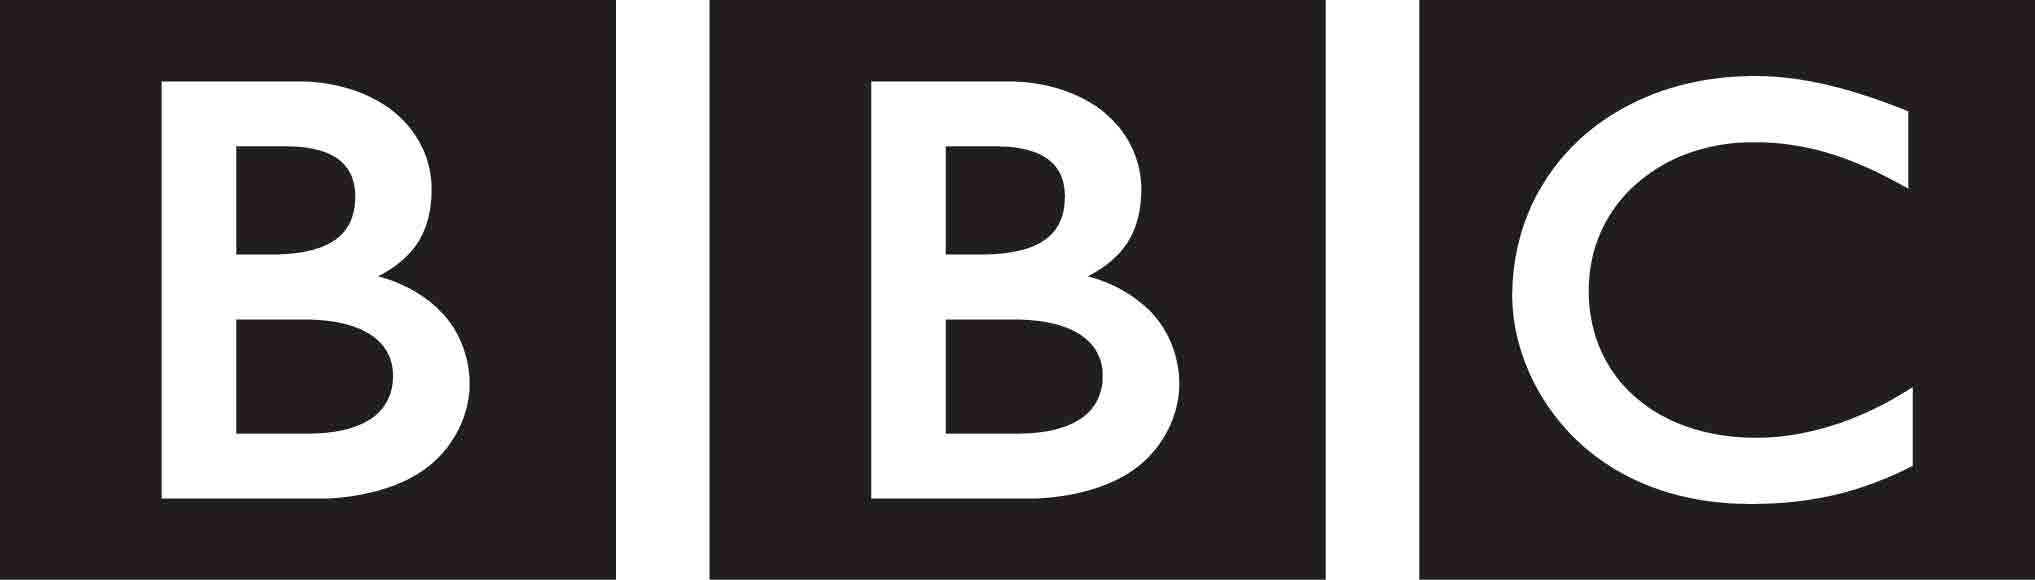 BBC-logo.jpeg